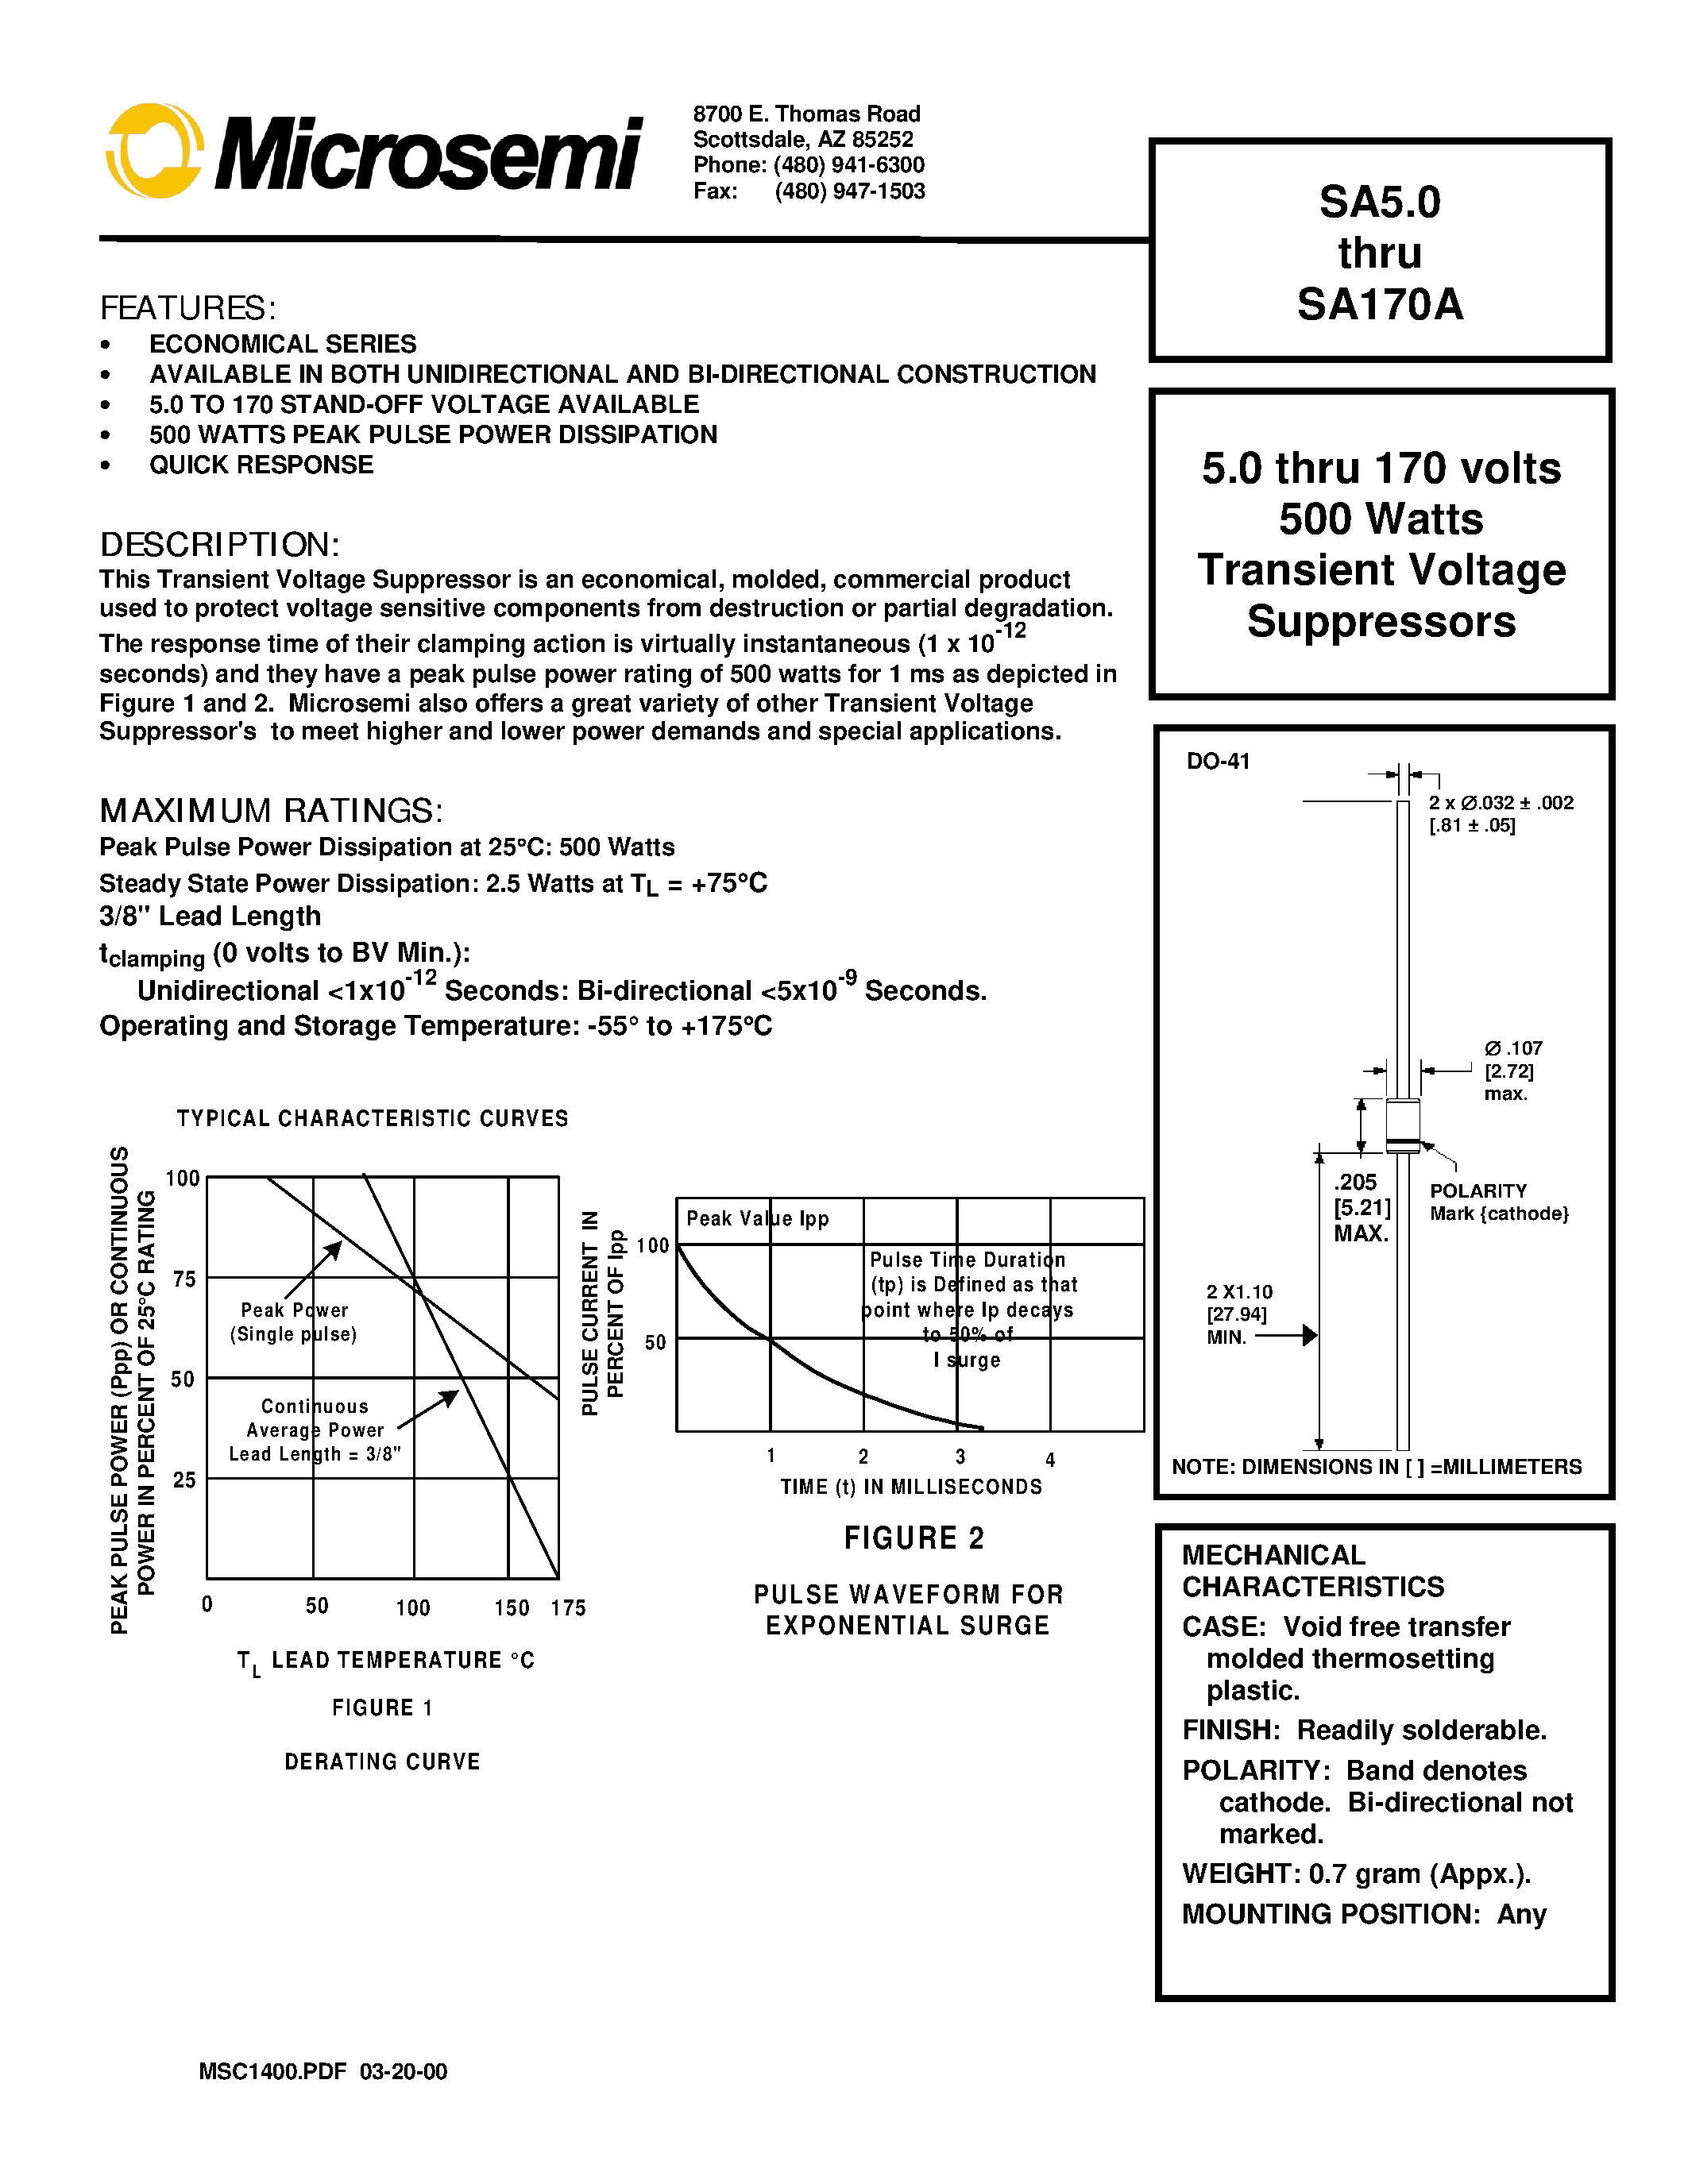 Datasheet SA33A - 5.0 thru 170 volts 500 Watts Transient Voltage Suppressors page 1